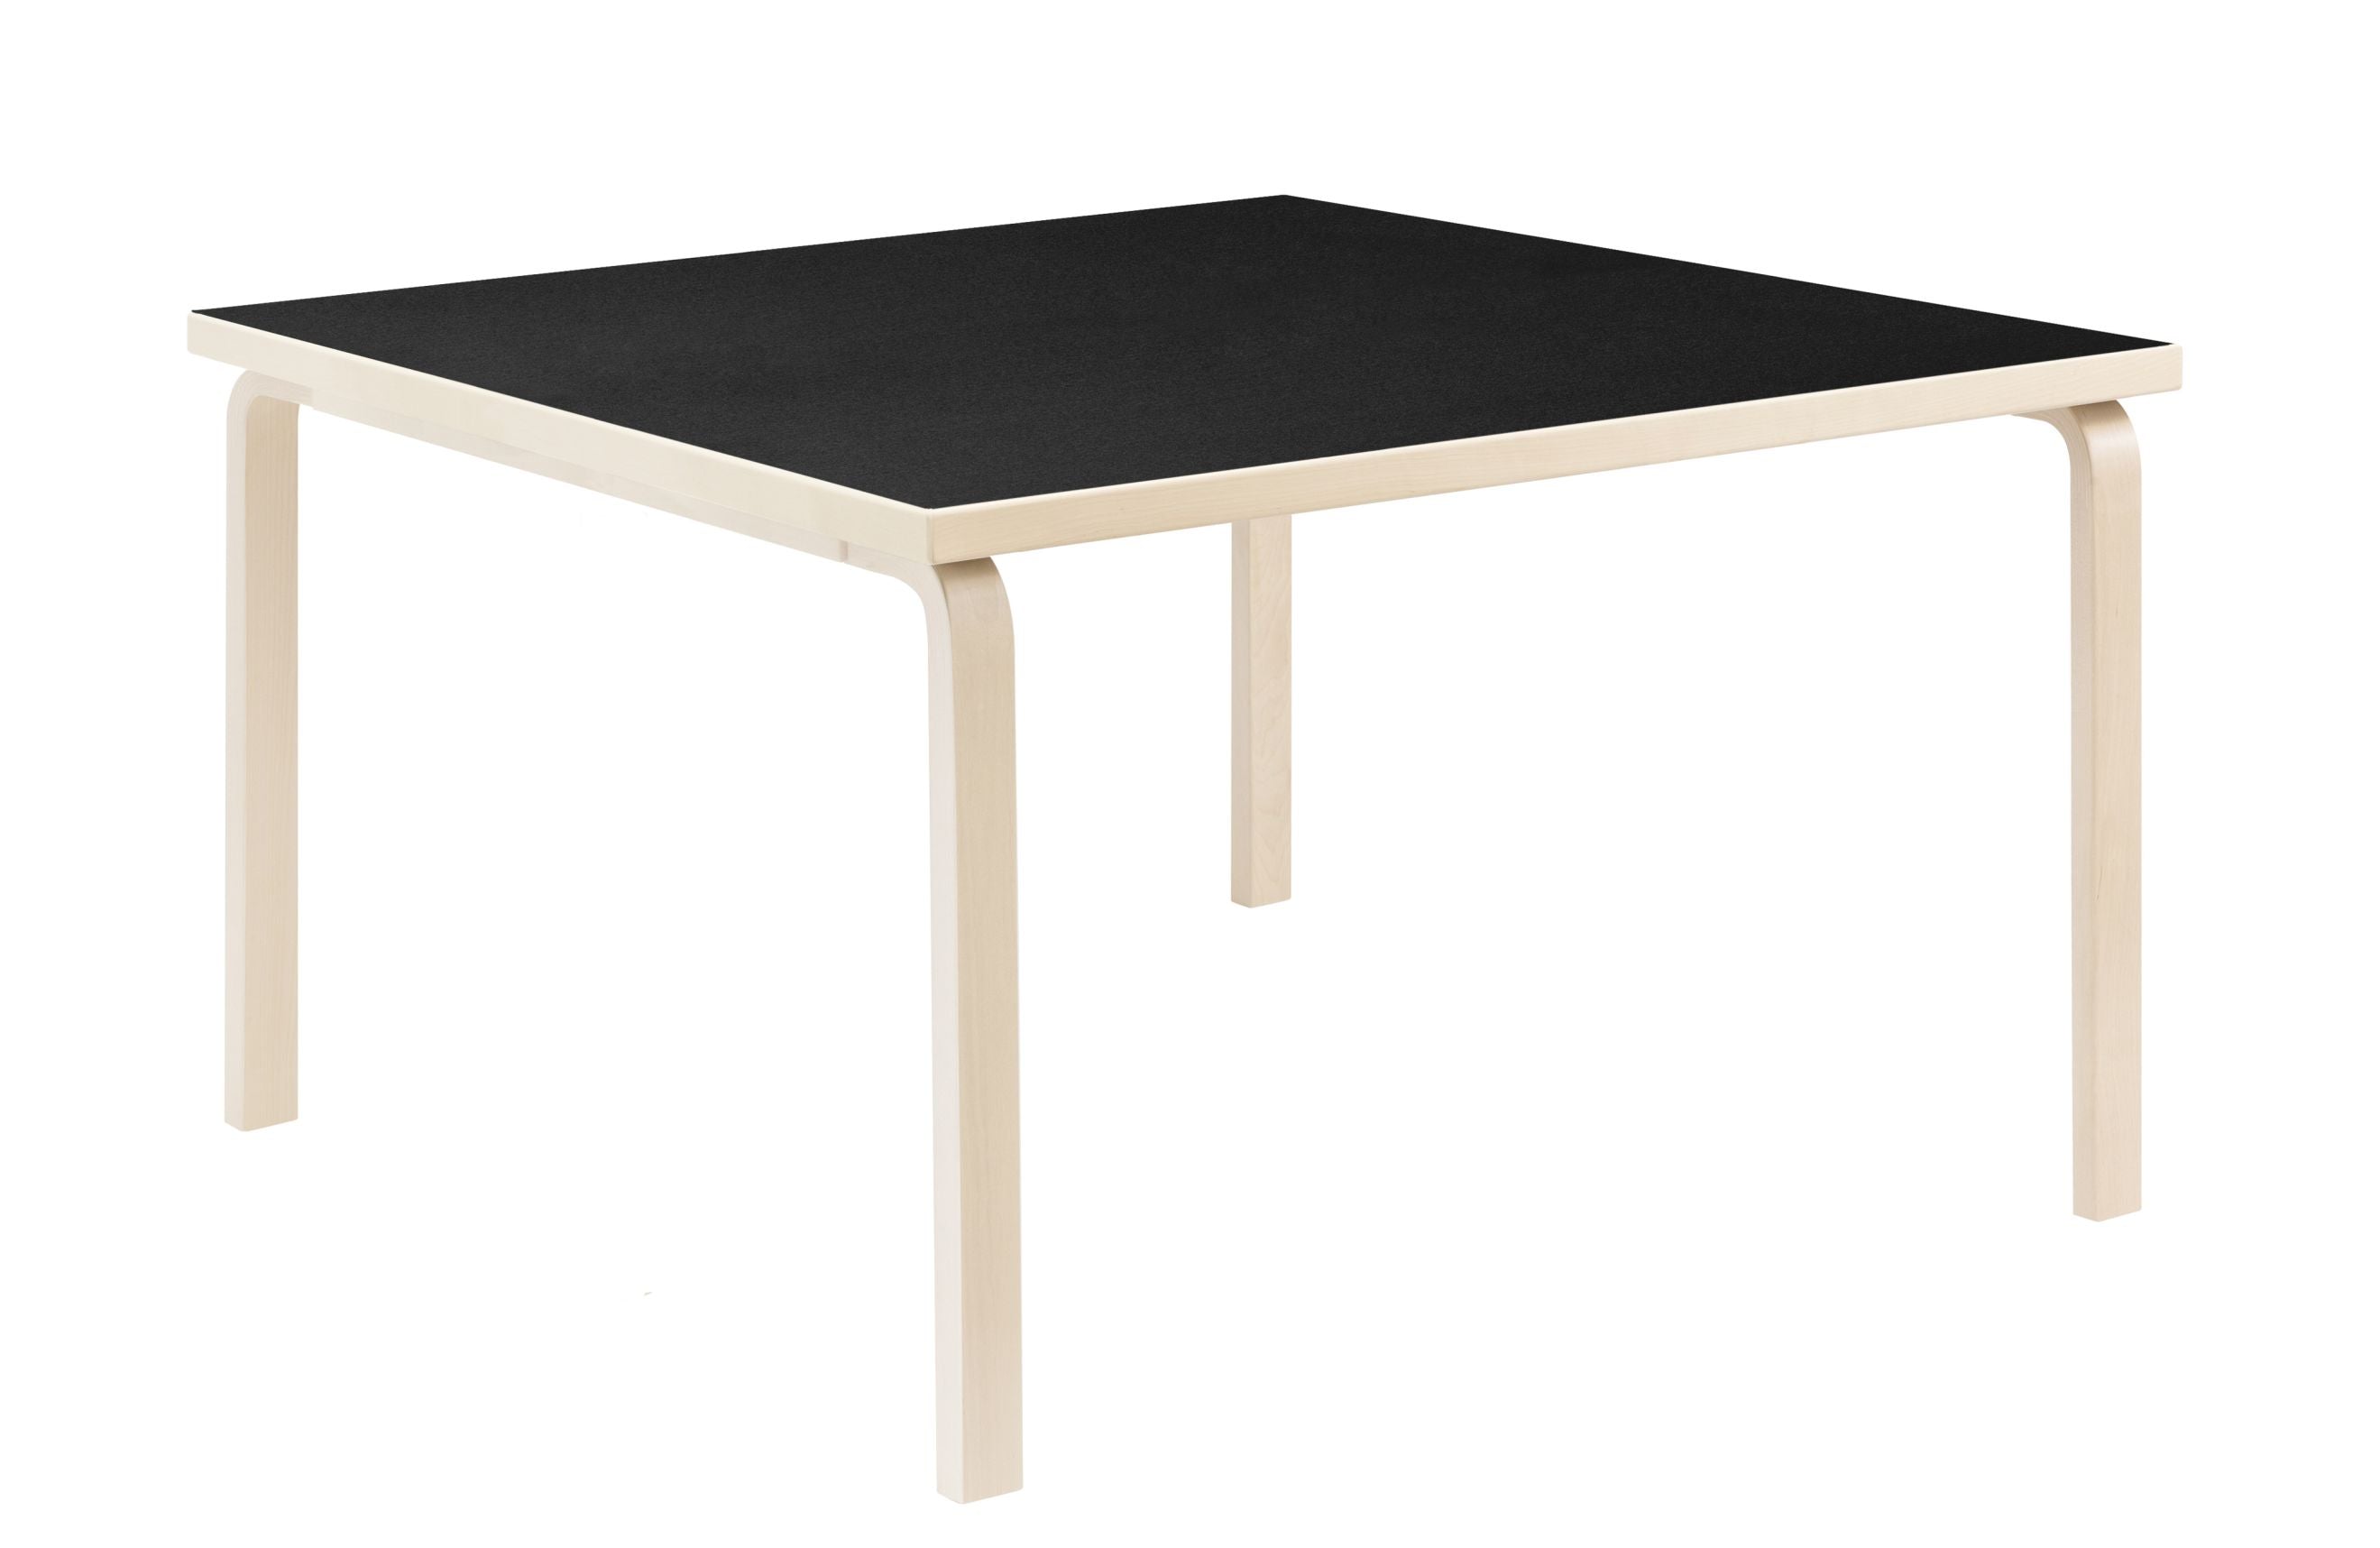 Aalto Table square 75x75cm / 29.5x29.5in